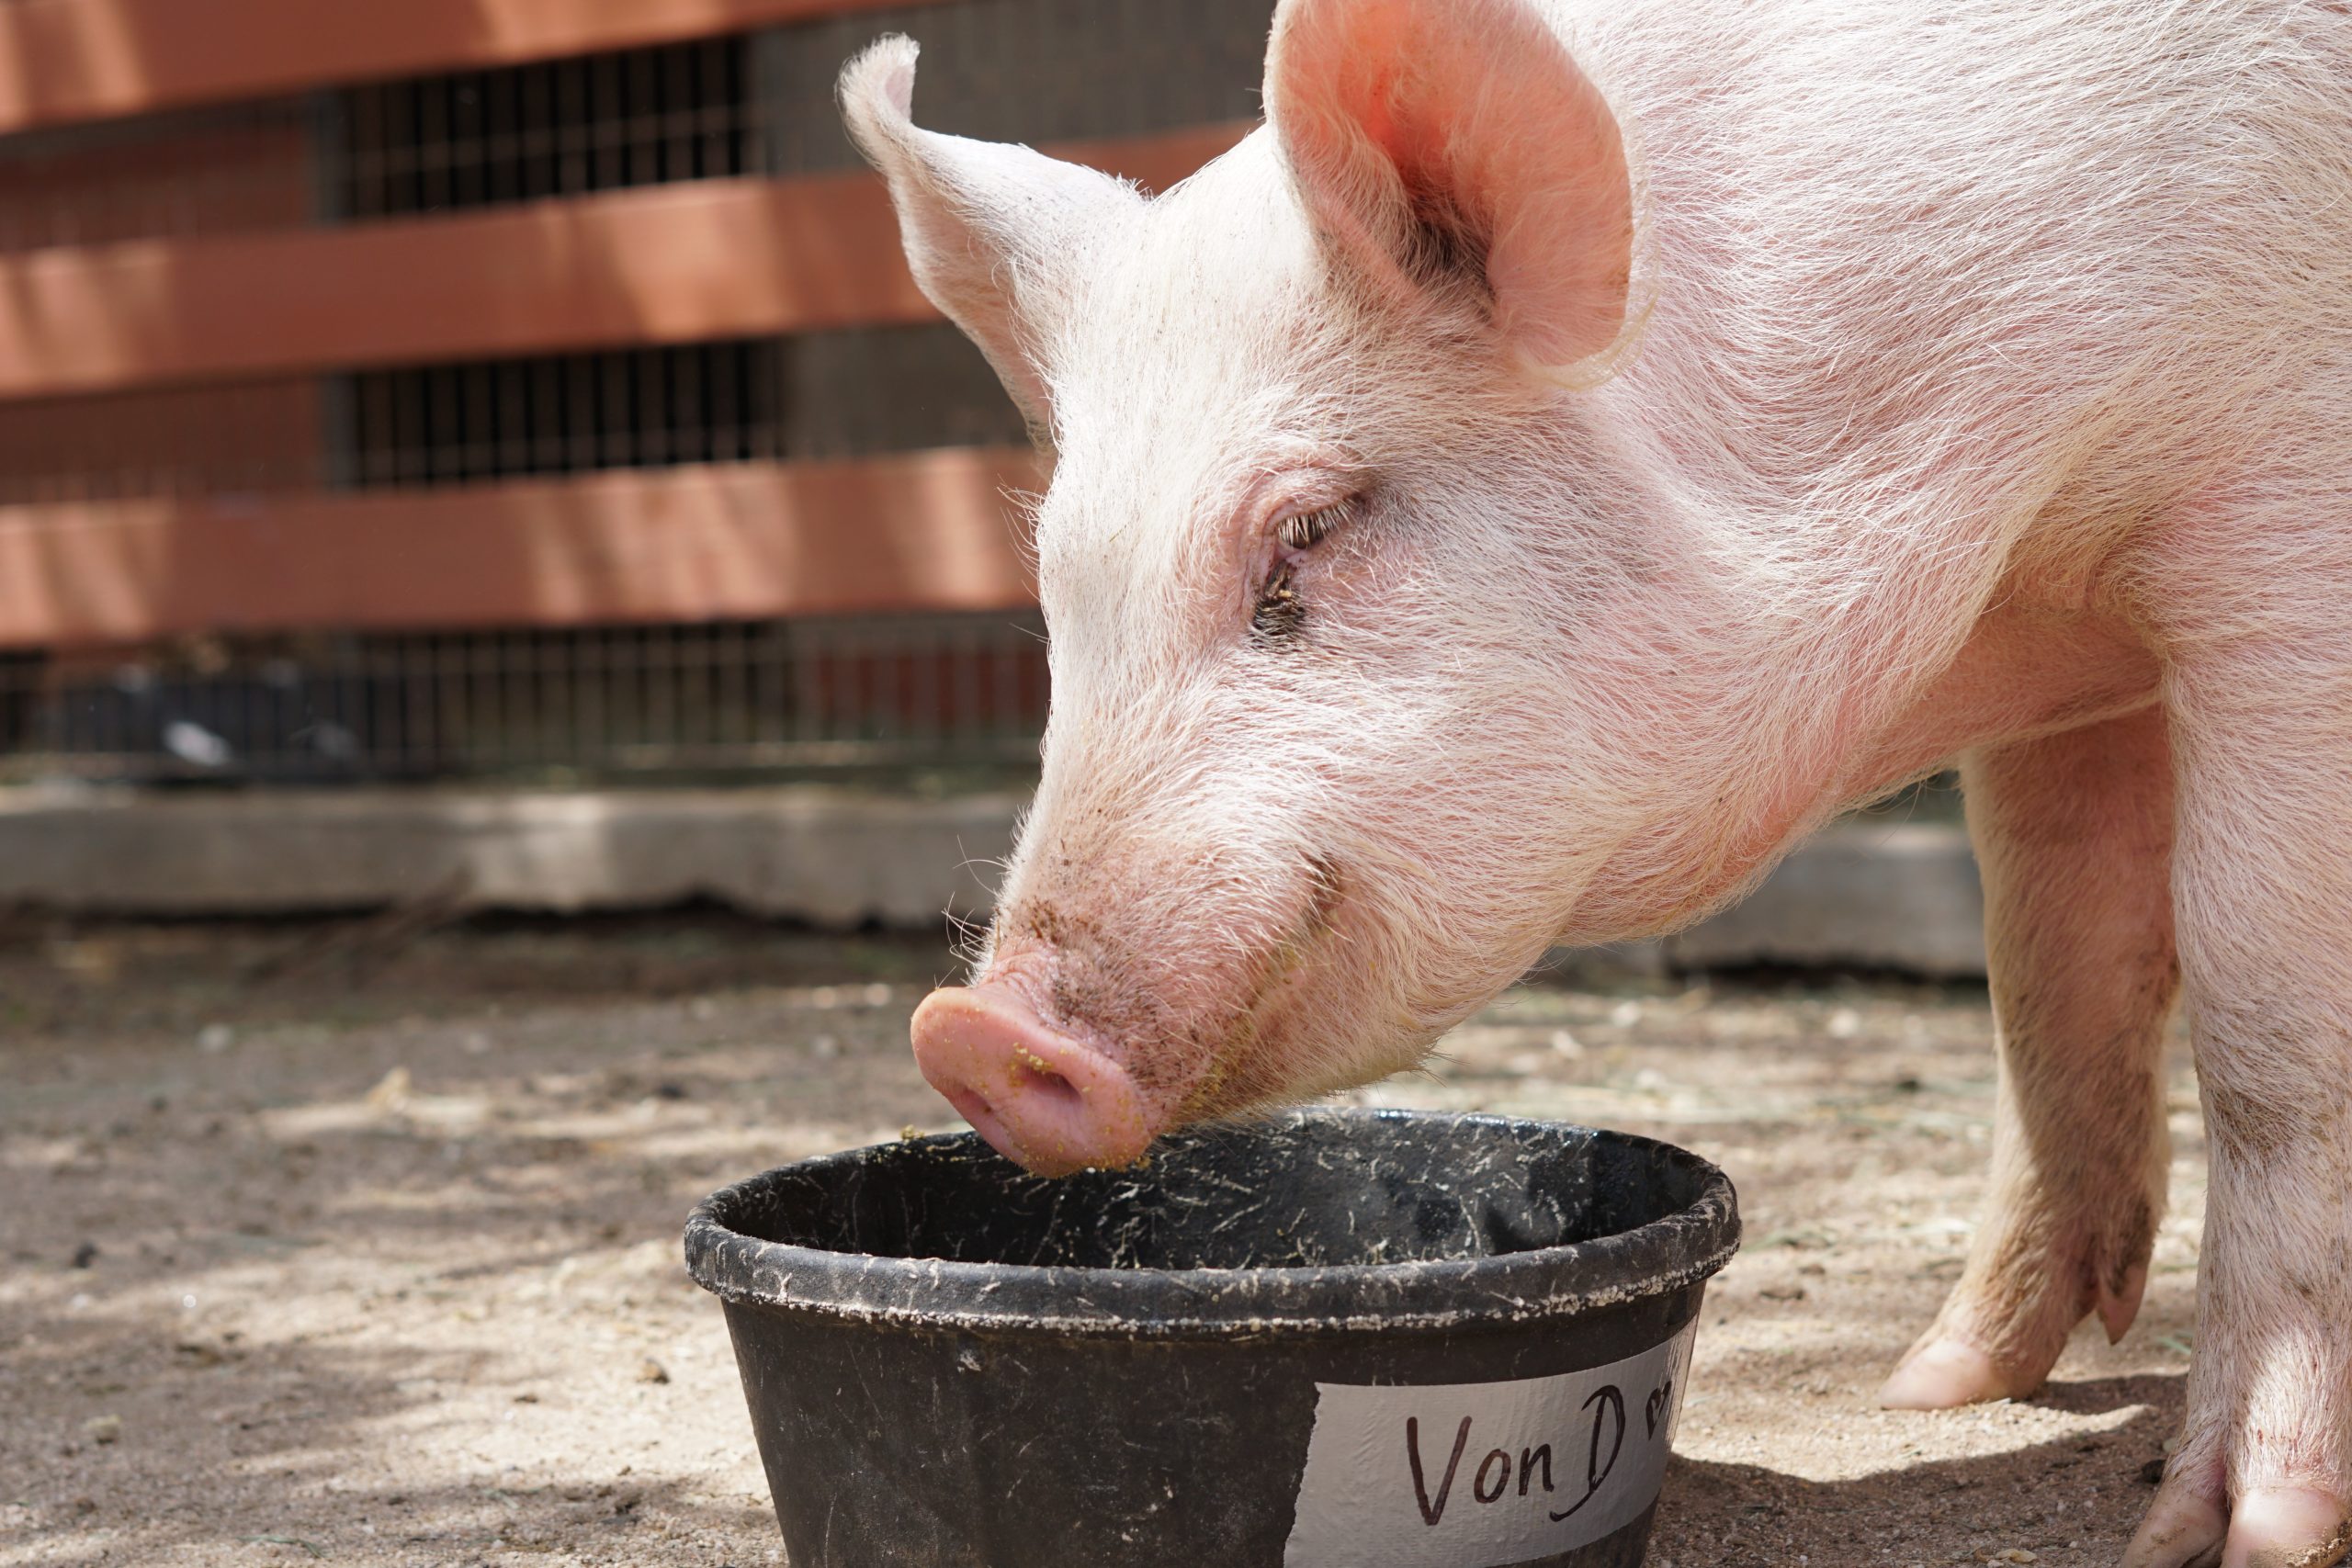 Von D as a piglet at Farm Sanctuary's Southern California shelter